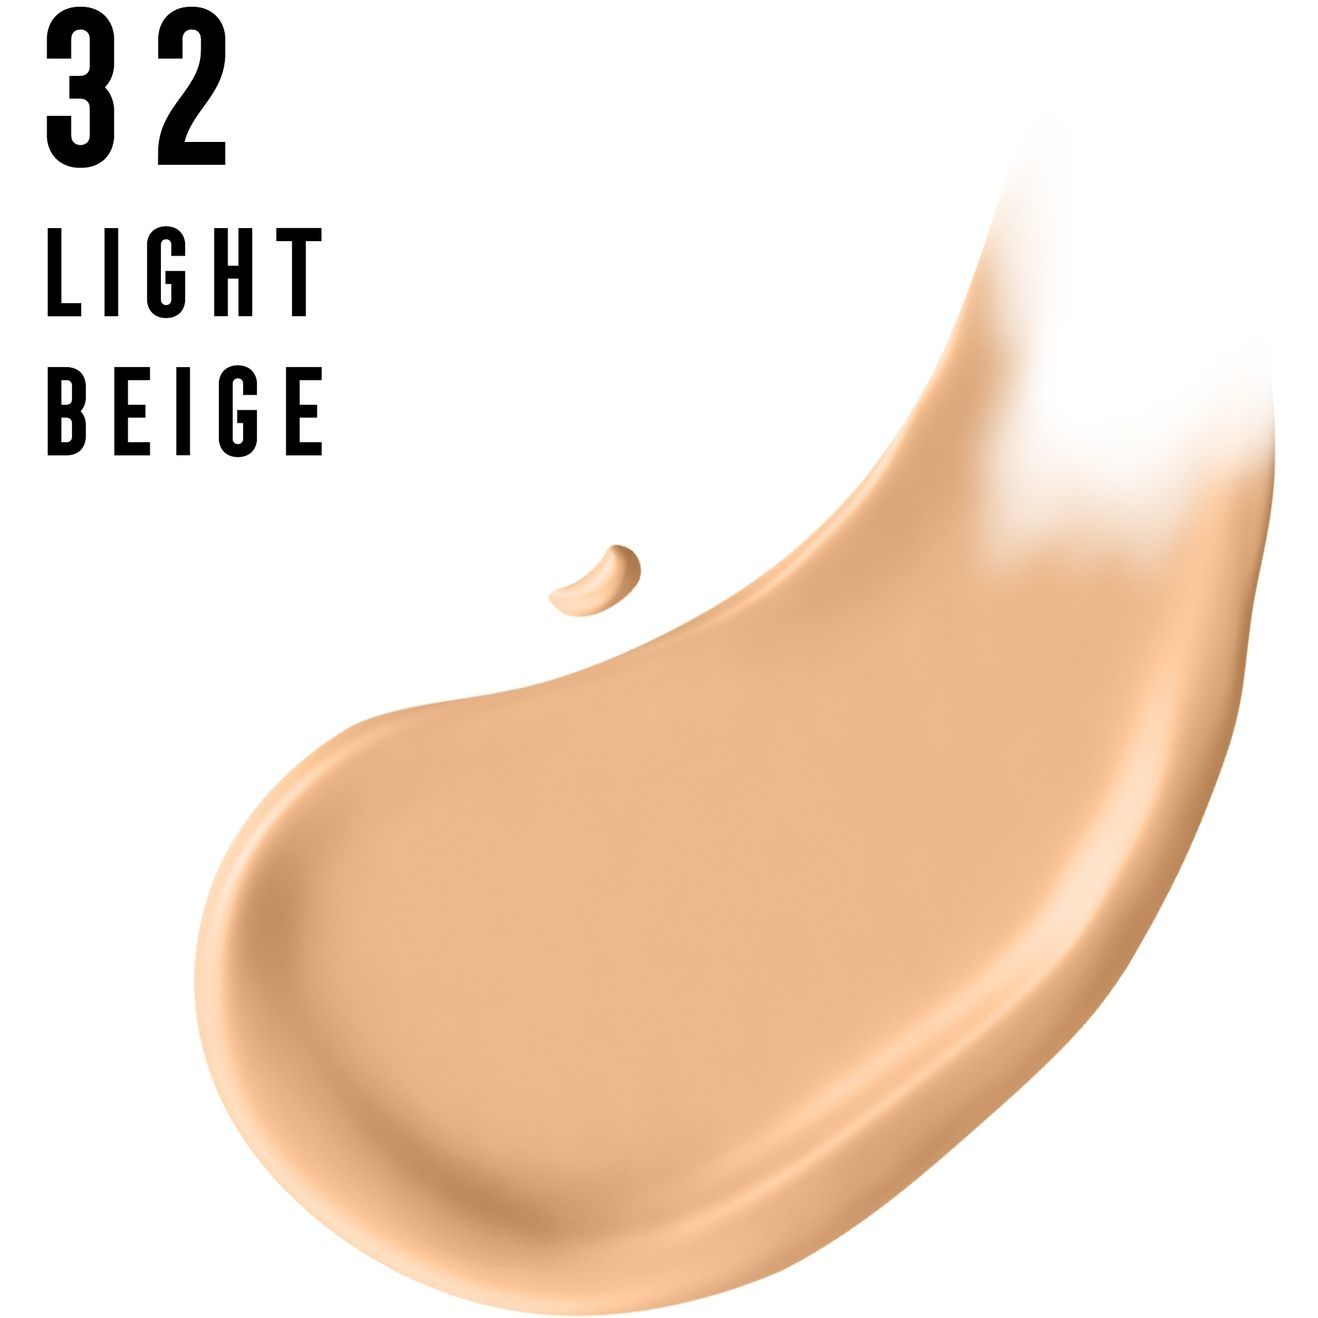 Тональная основа Max Factor Miracle Pure Skin-Improving Foundation SPF30 тон 032 (Light Beige) 30 мл - фото 3